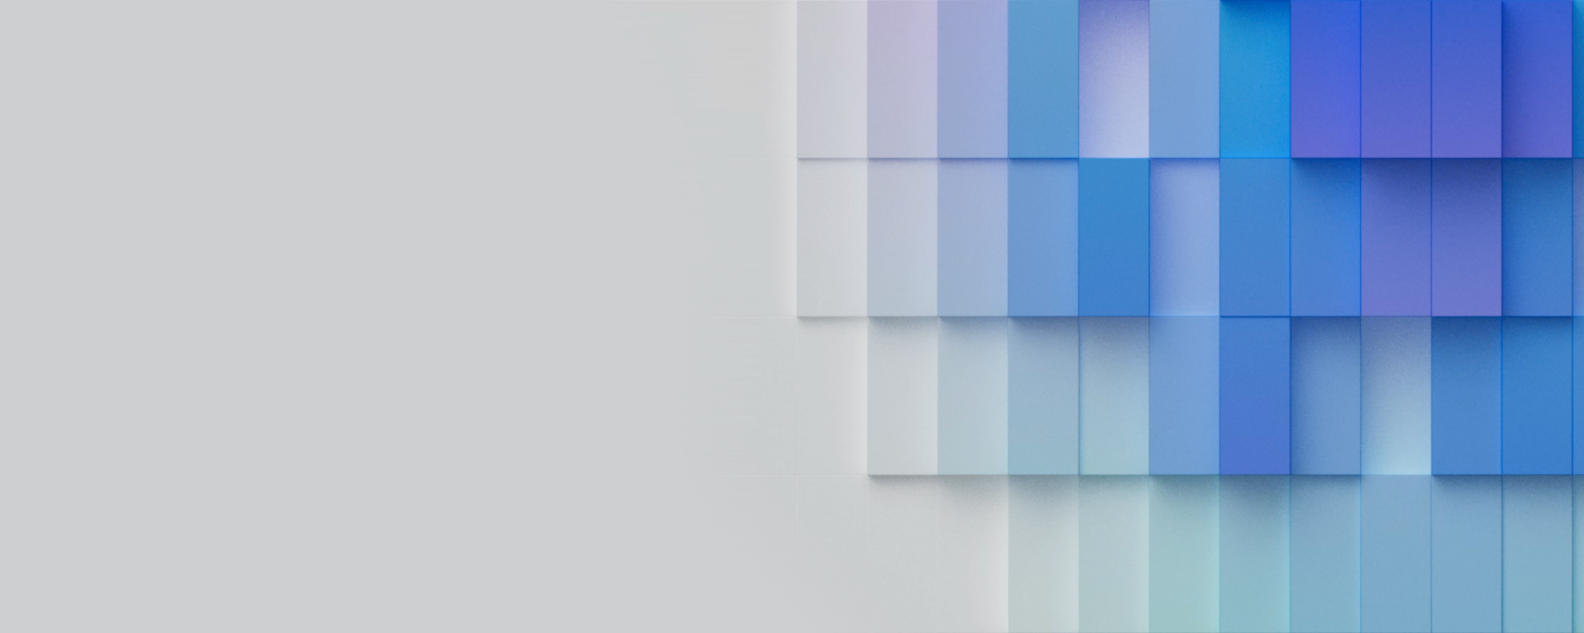 Persegi panjang ungu dan biru abstrak dalam kisi